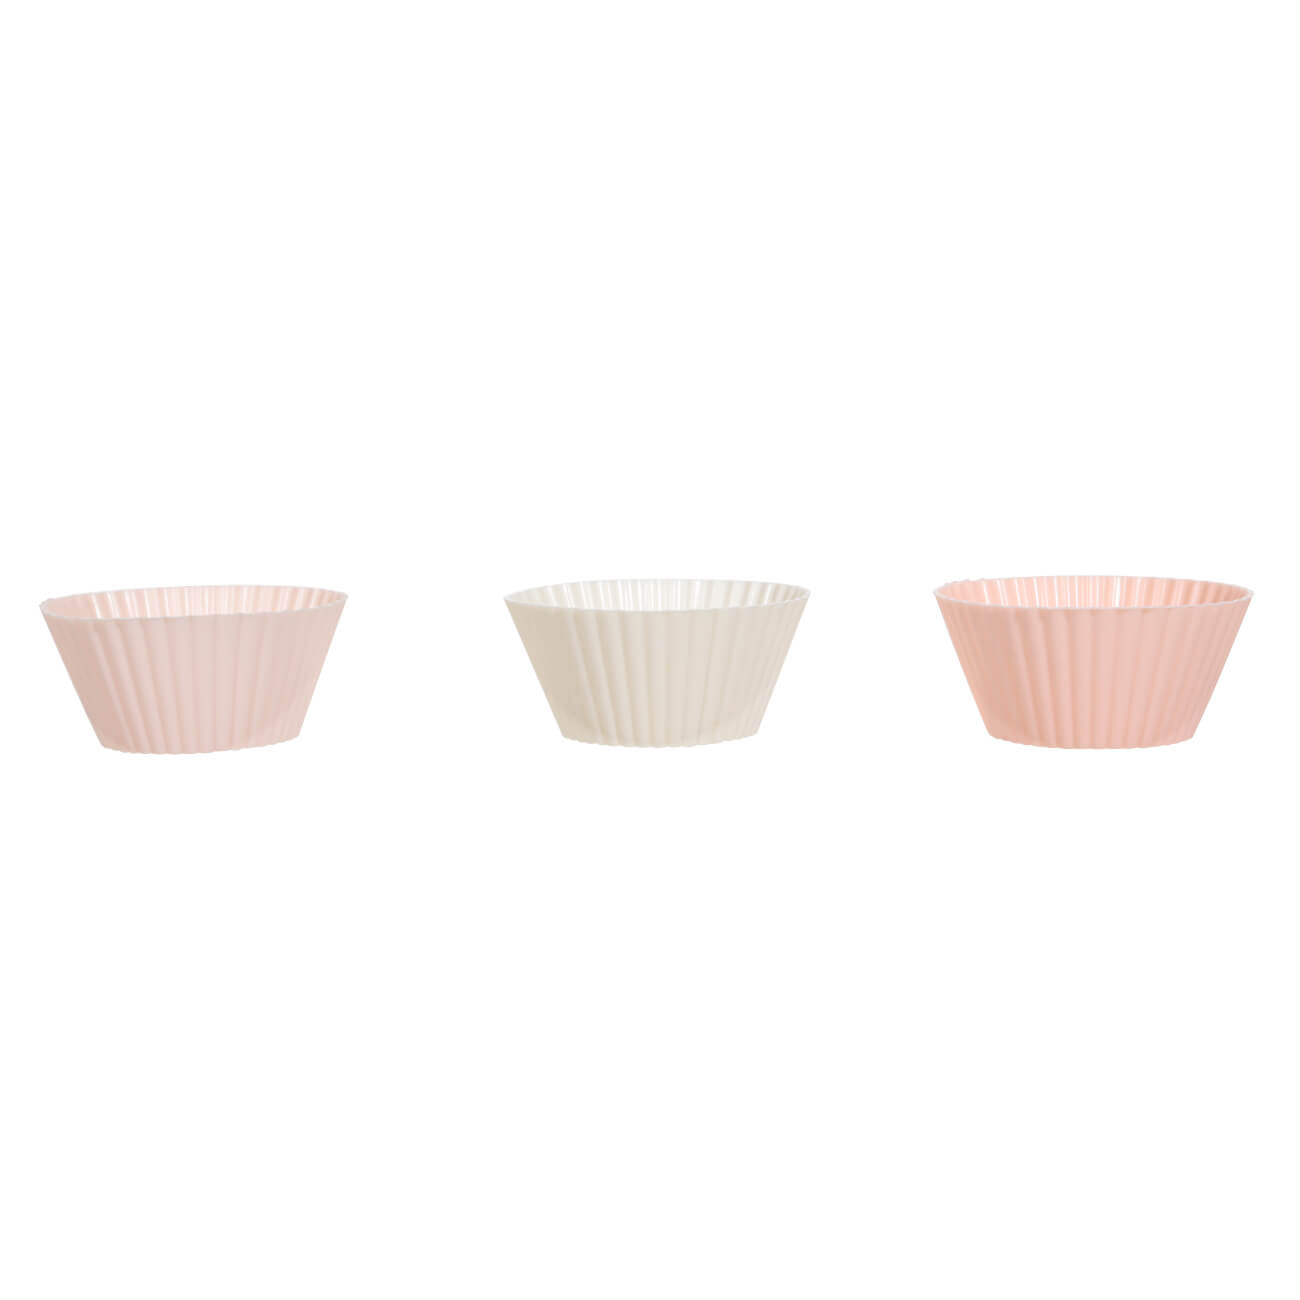 Форма для выпечки кексов, 7х3 см, 6 шт, силикон, бежевая/розовая/белая, Bakery